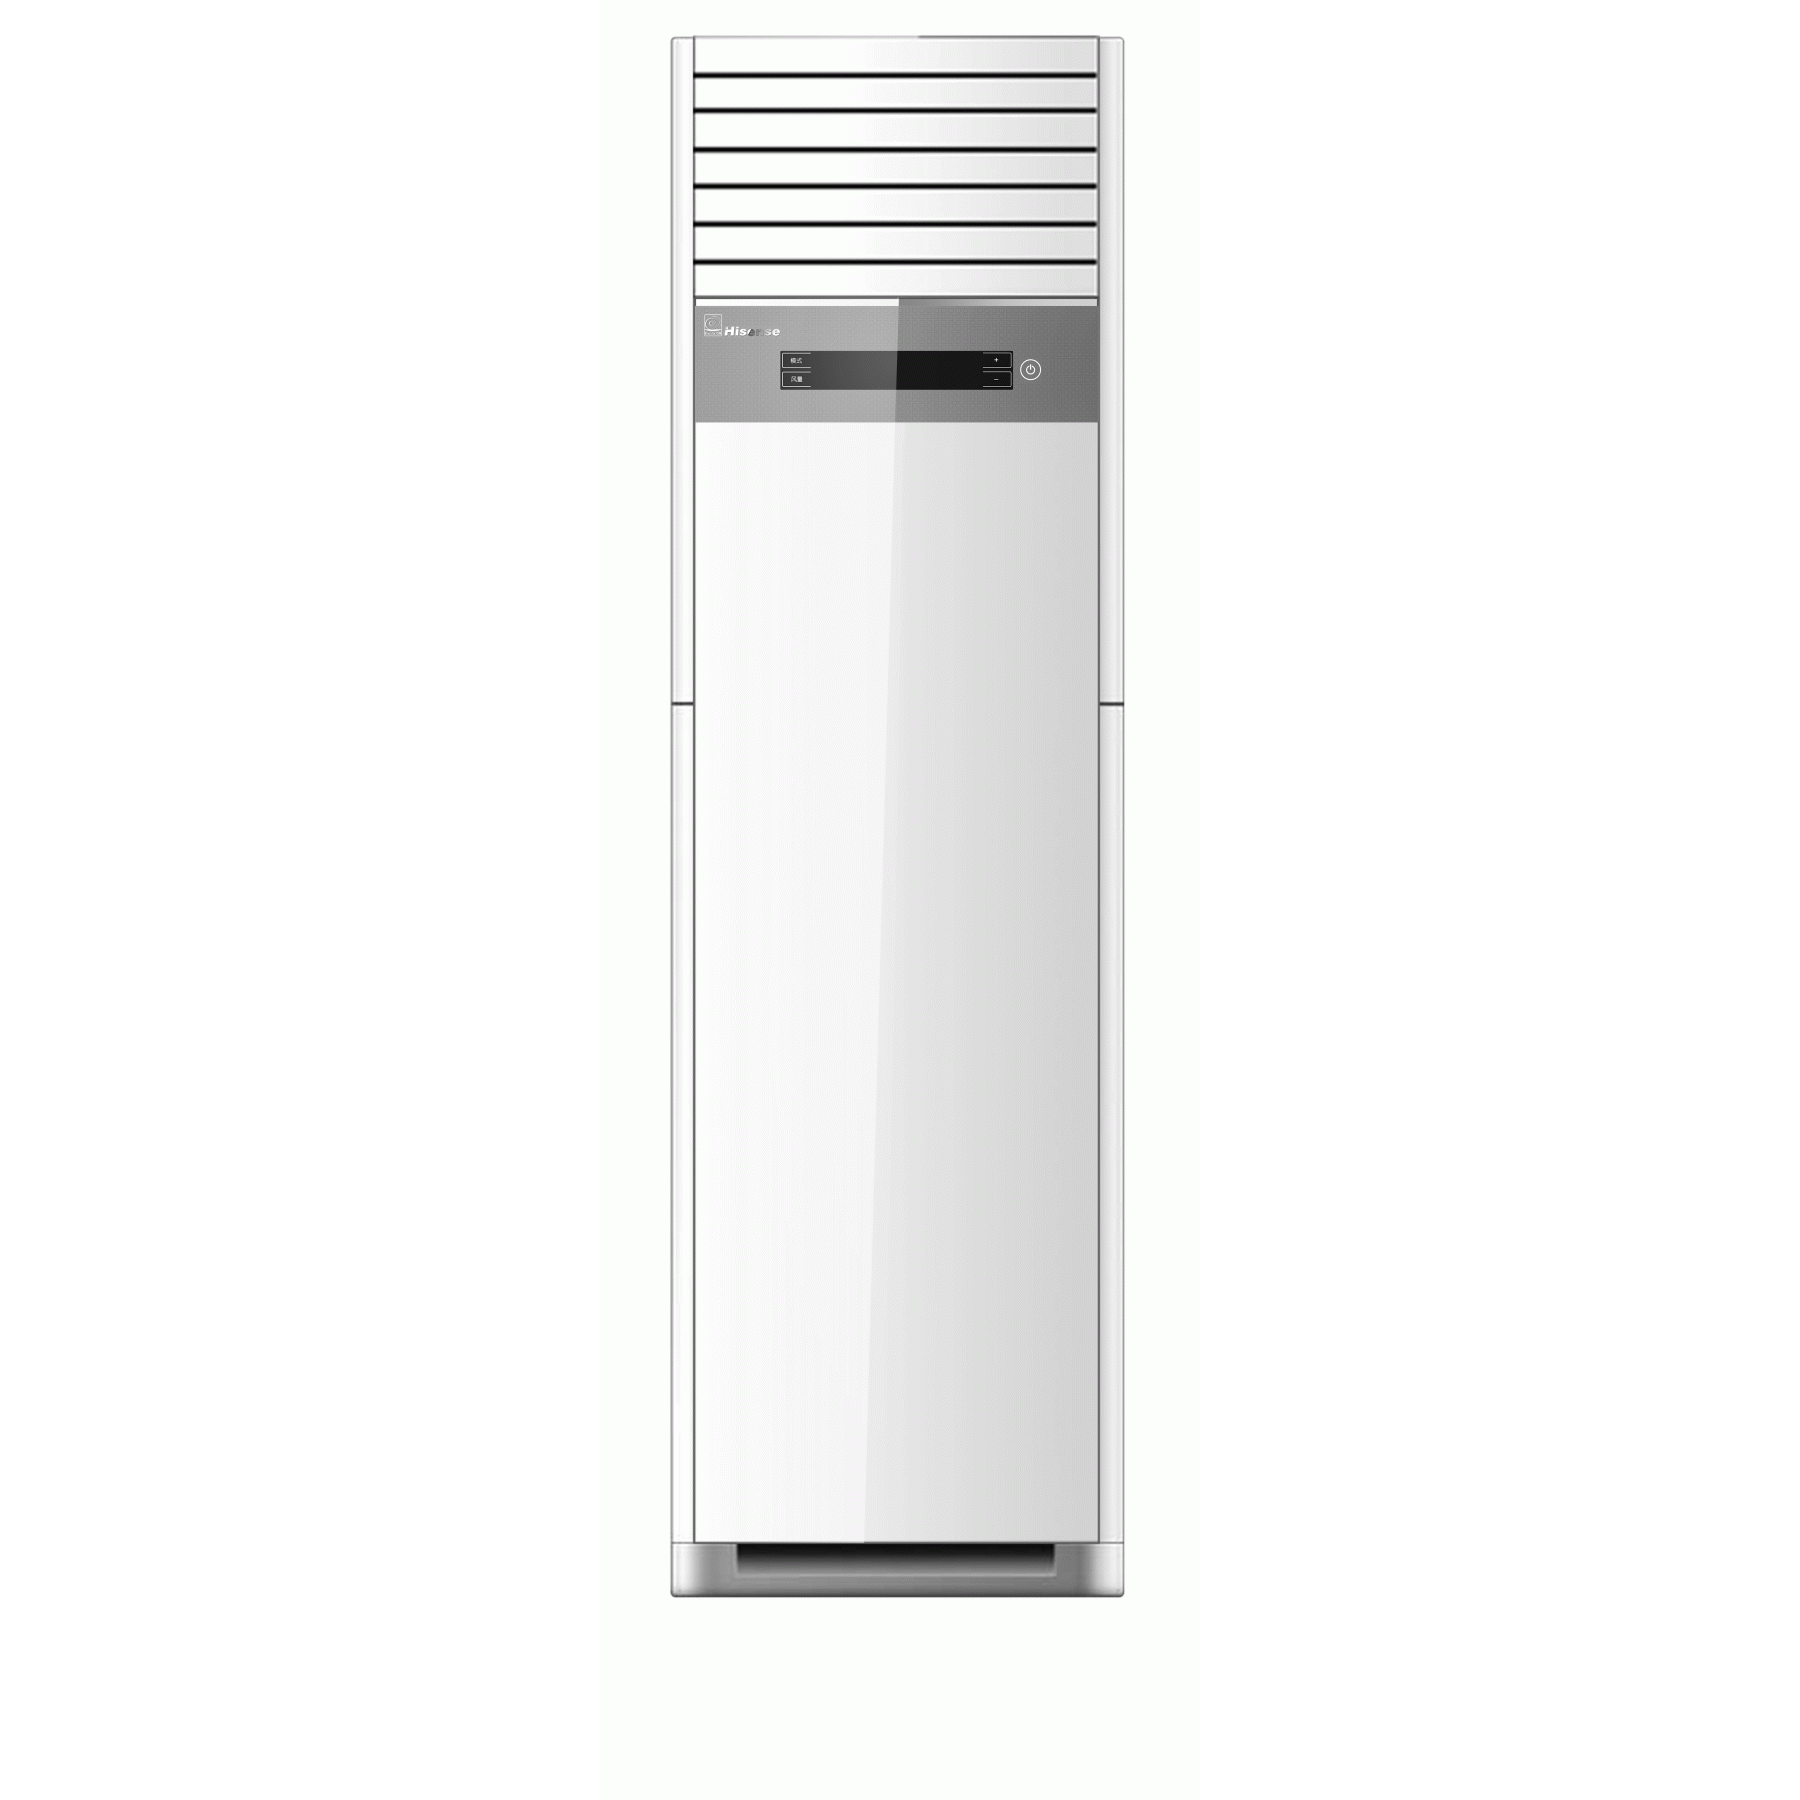 Hisense 5HP Floor Standing Air Conditioner 5 Tons | FS 5HP Hisense